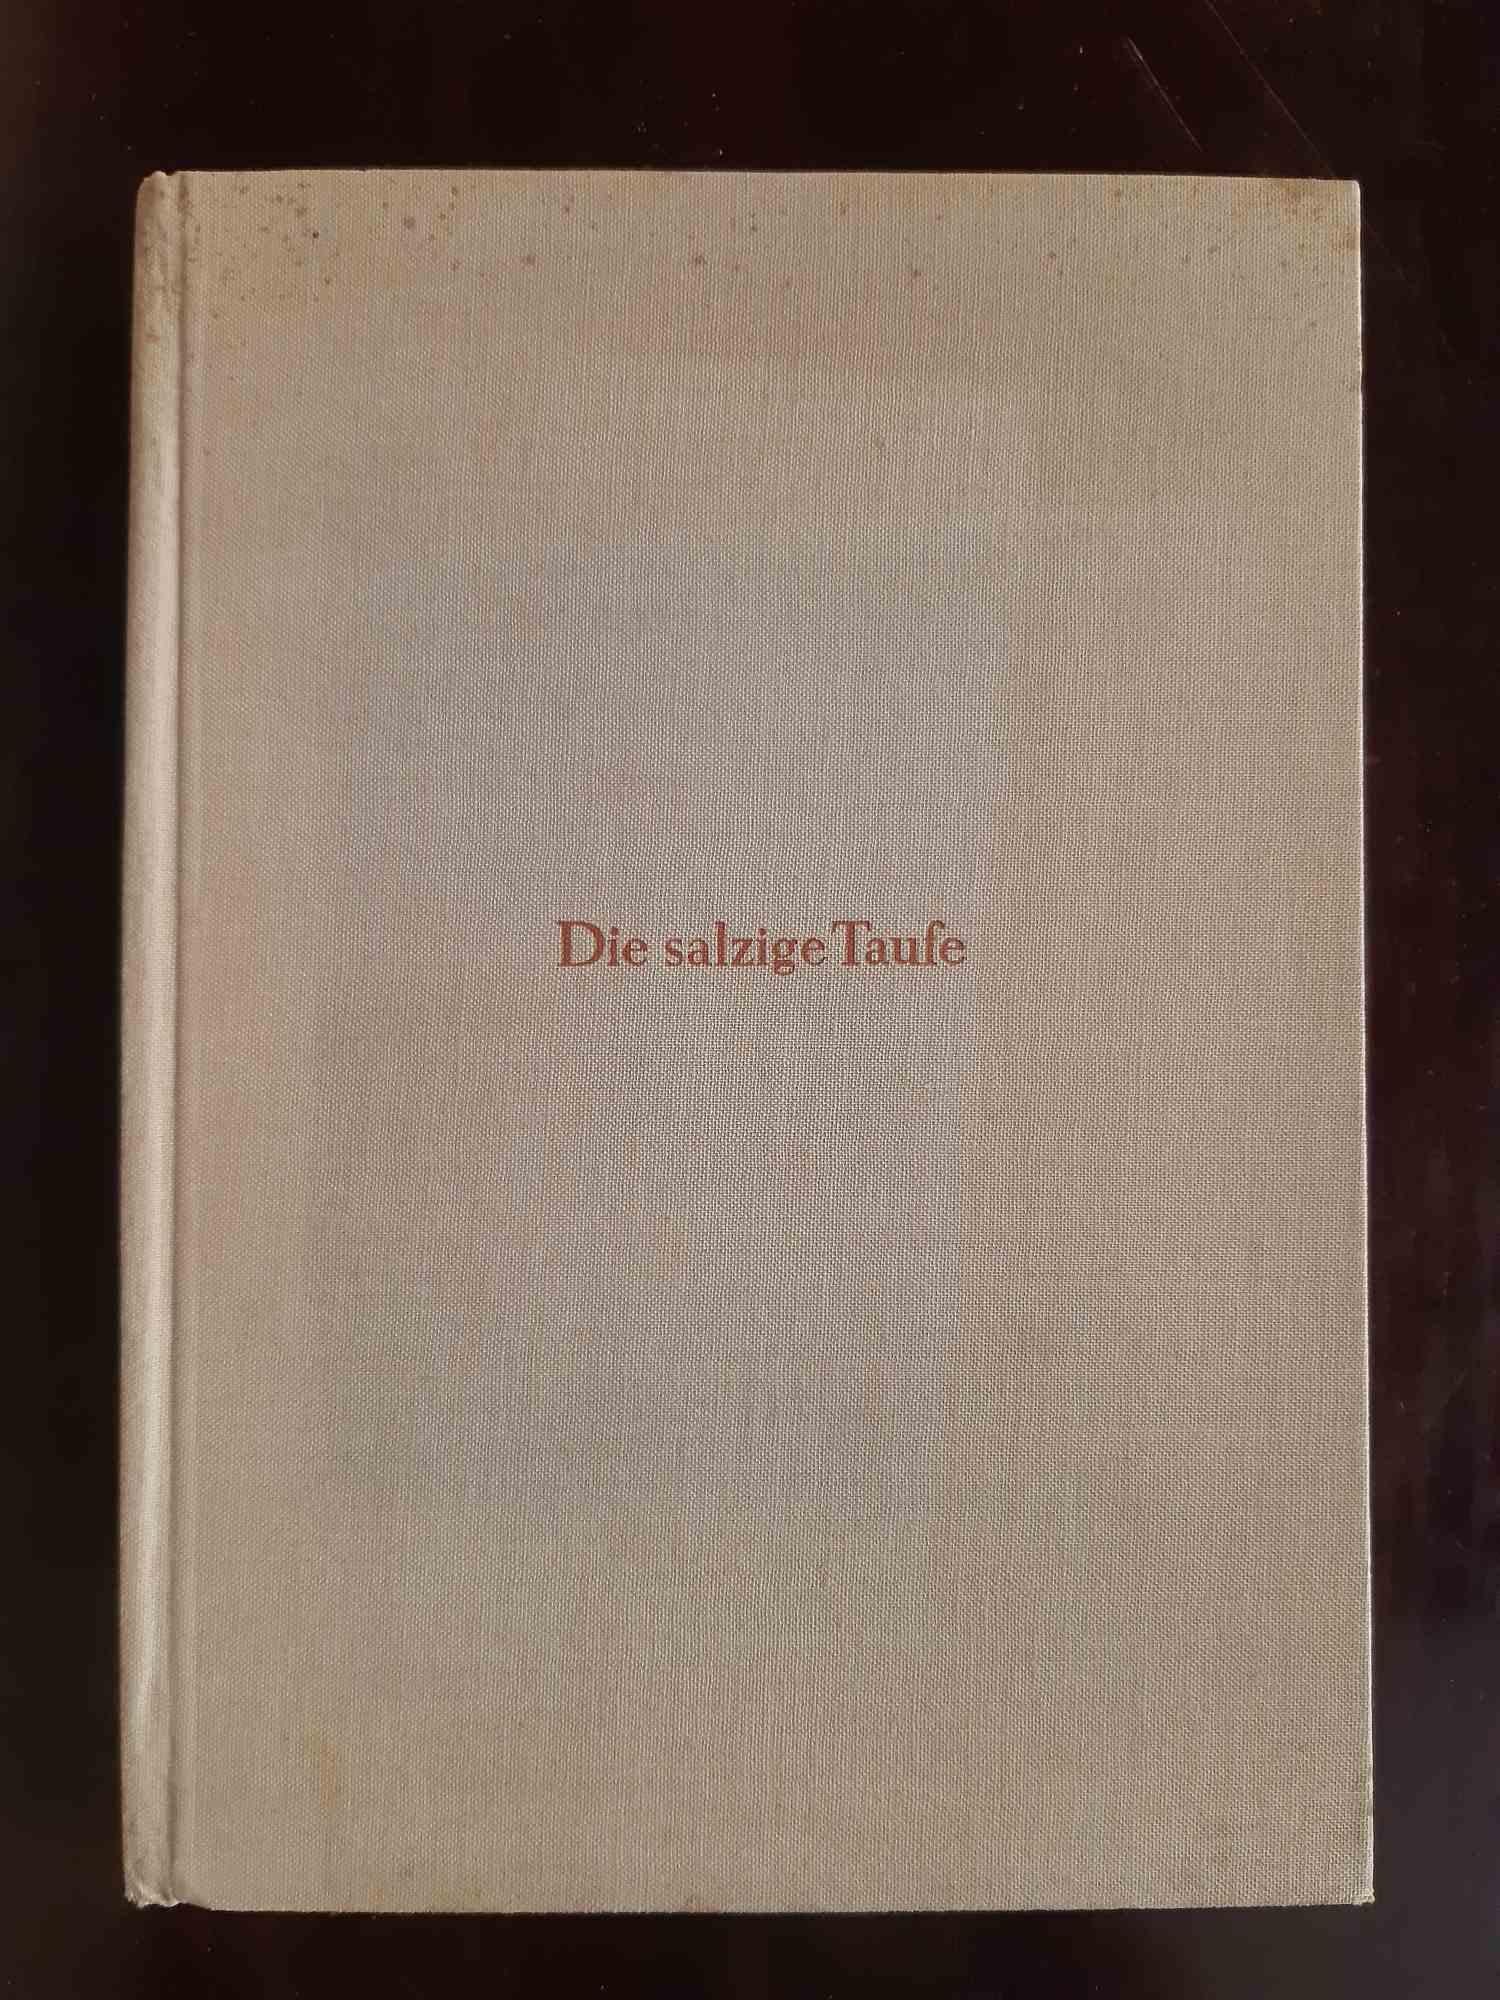 Die Salzige Taufe - Original Rare book Illustrated by Karl Rössing - 1933 For Sale 4